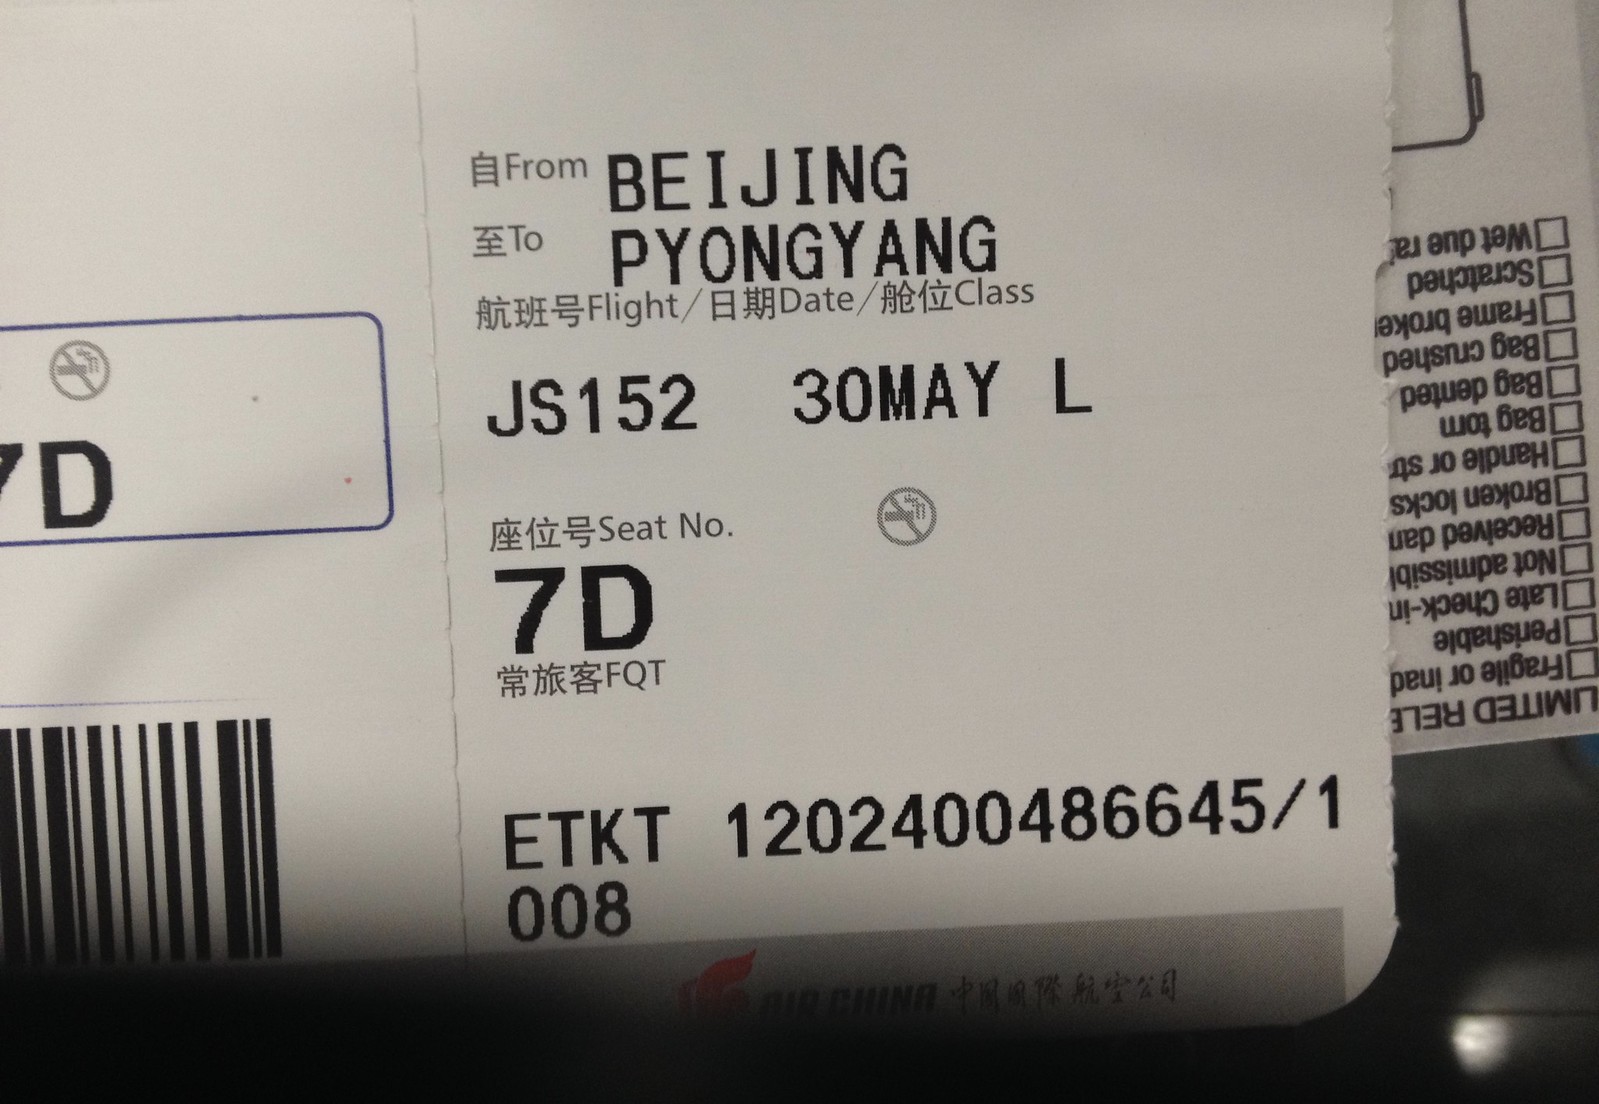 Air Koryo boarding pass PEK-FNJ